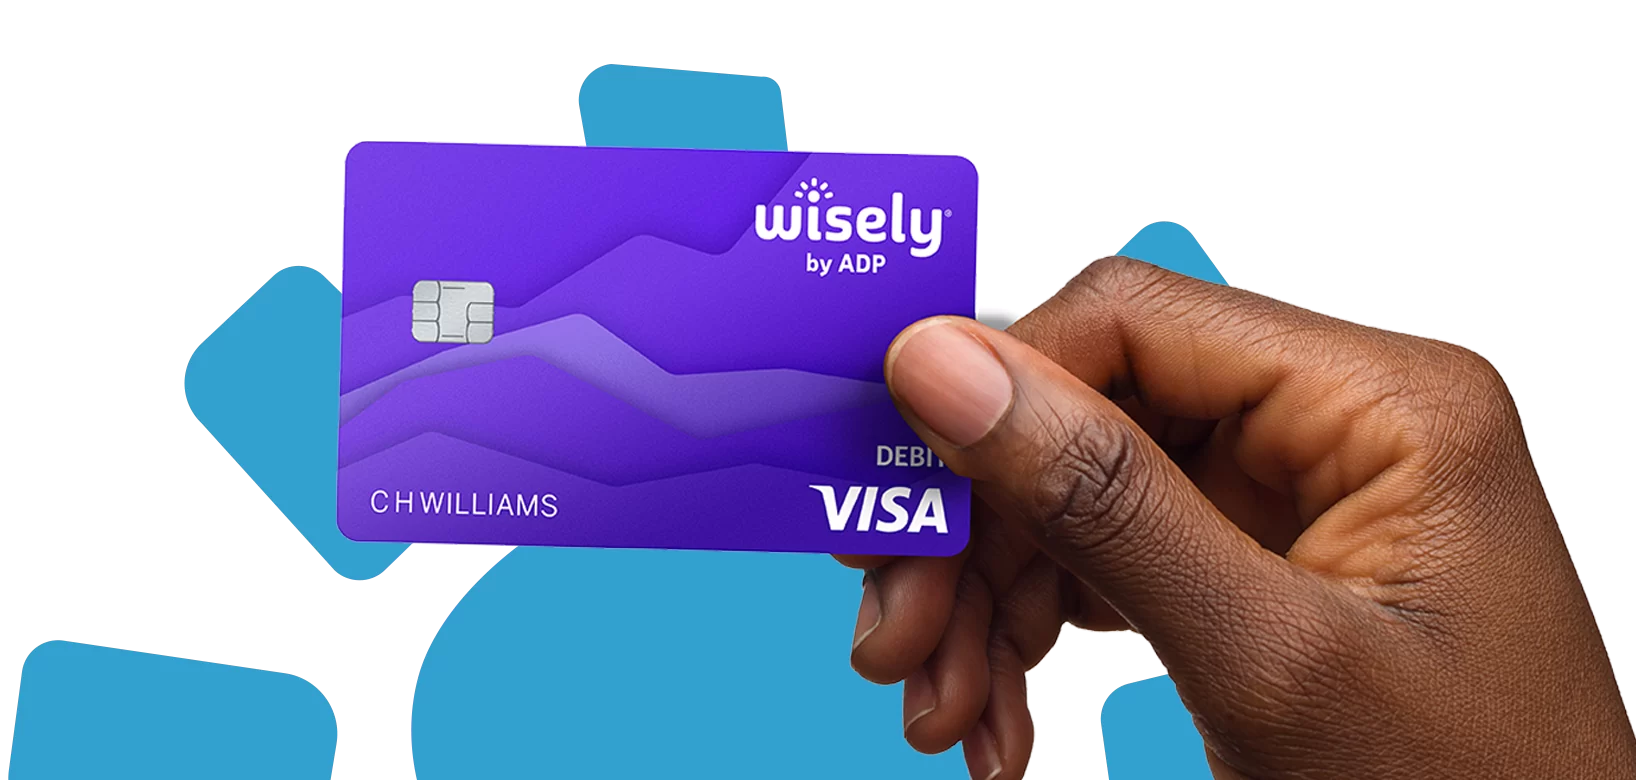 Wisely Visa Debit card in hand